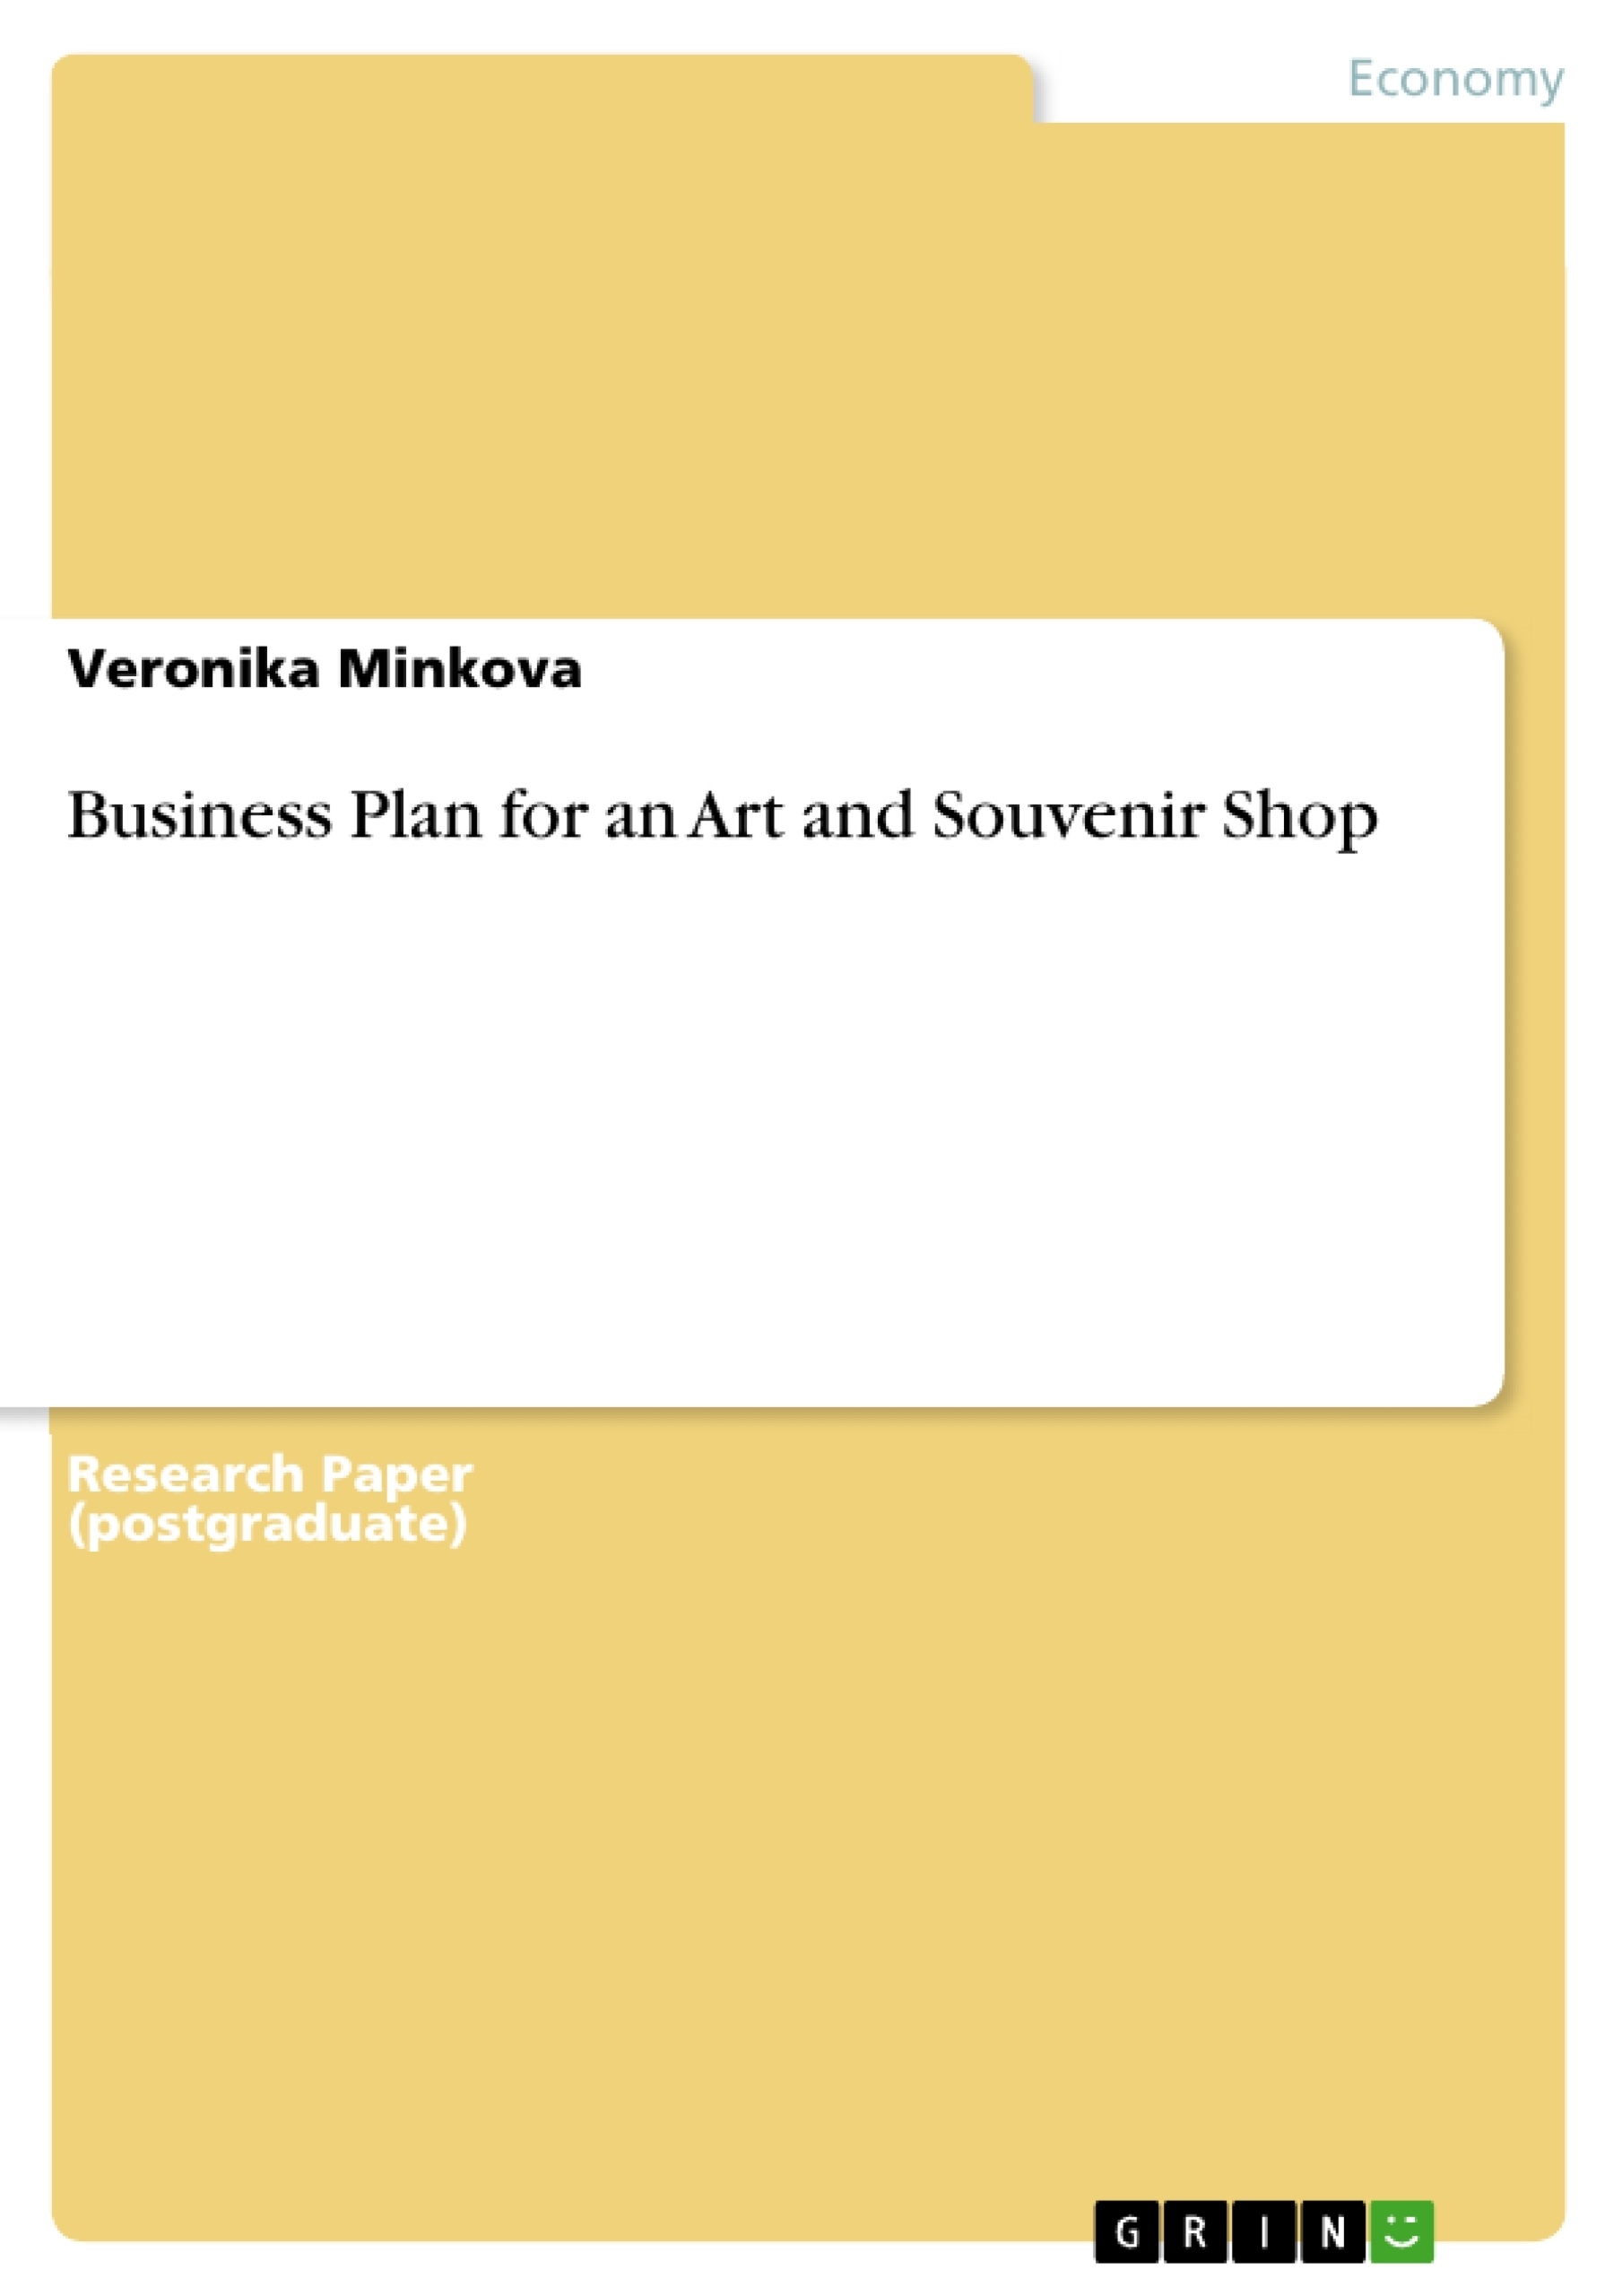 Self publishing business plan template